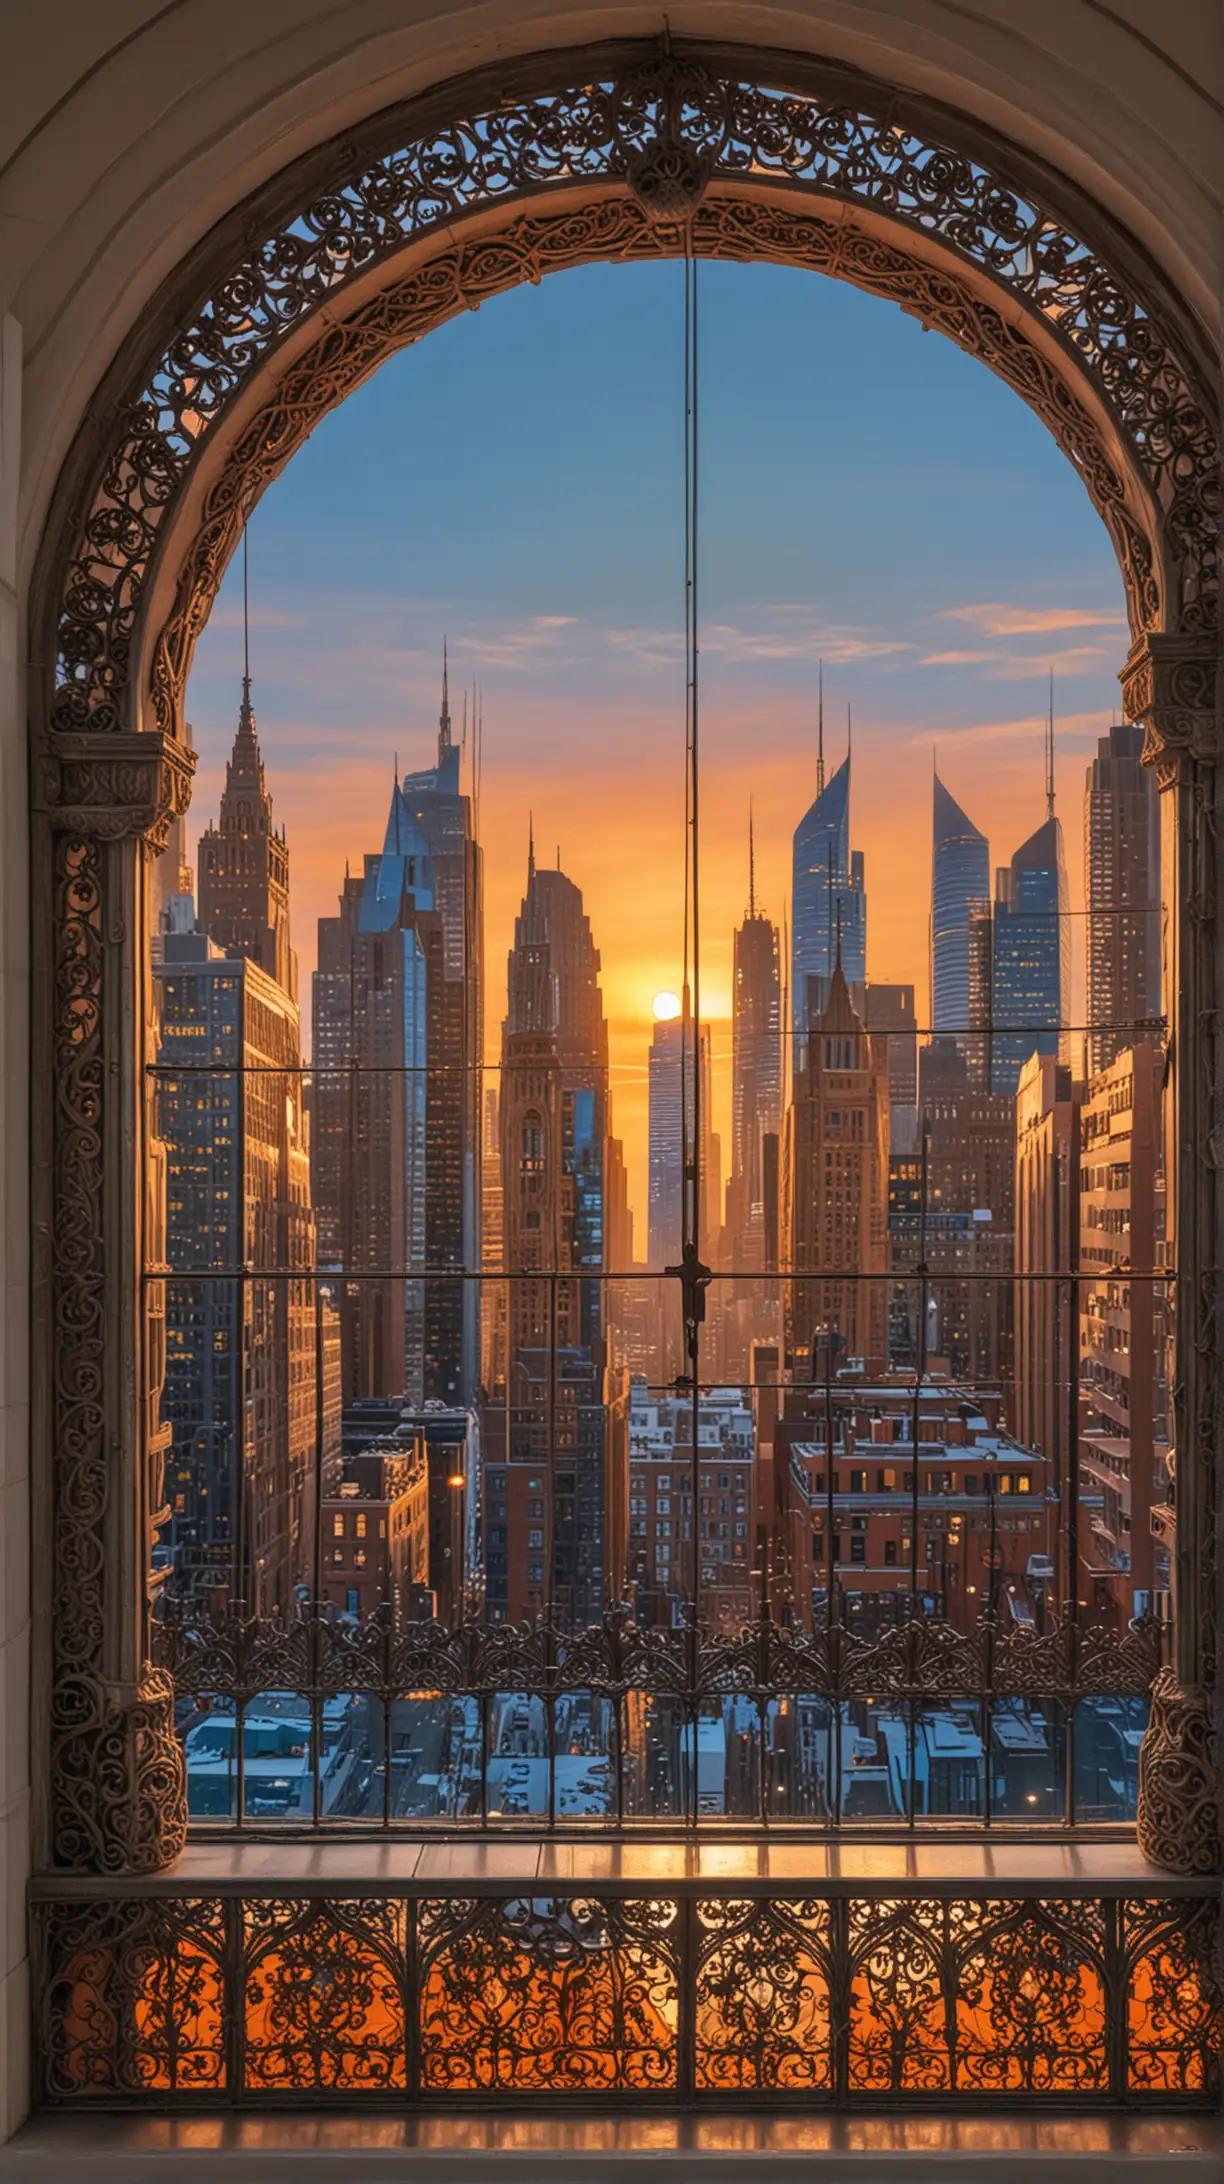 Futuristic Cityscape View Through Ornate Arched Window